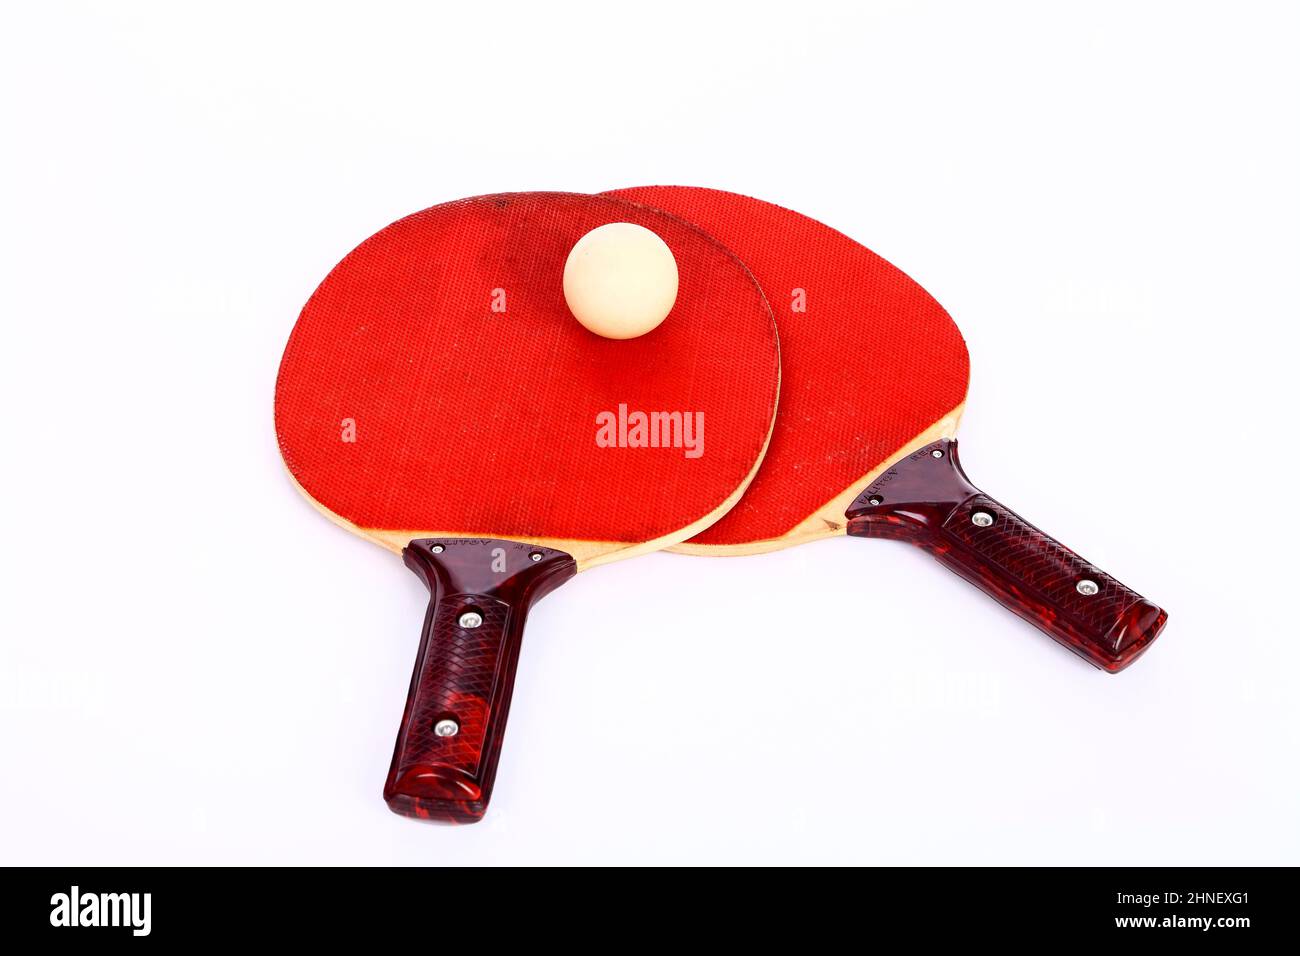 Pipistrelli di badminton vintage con marchio Palitoy e pallina da ping pong Foto Stock